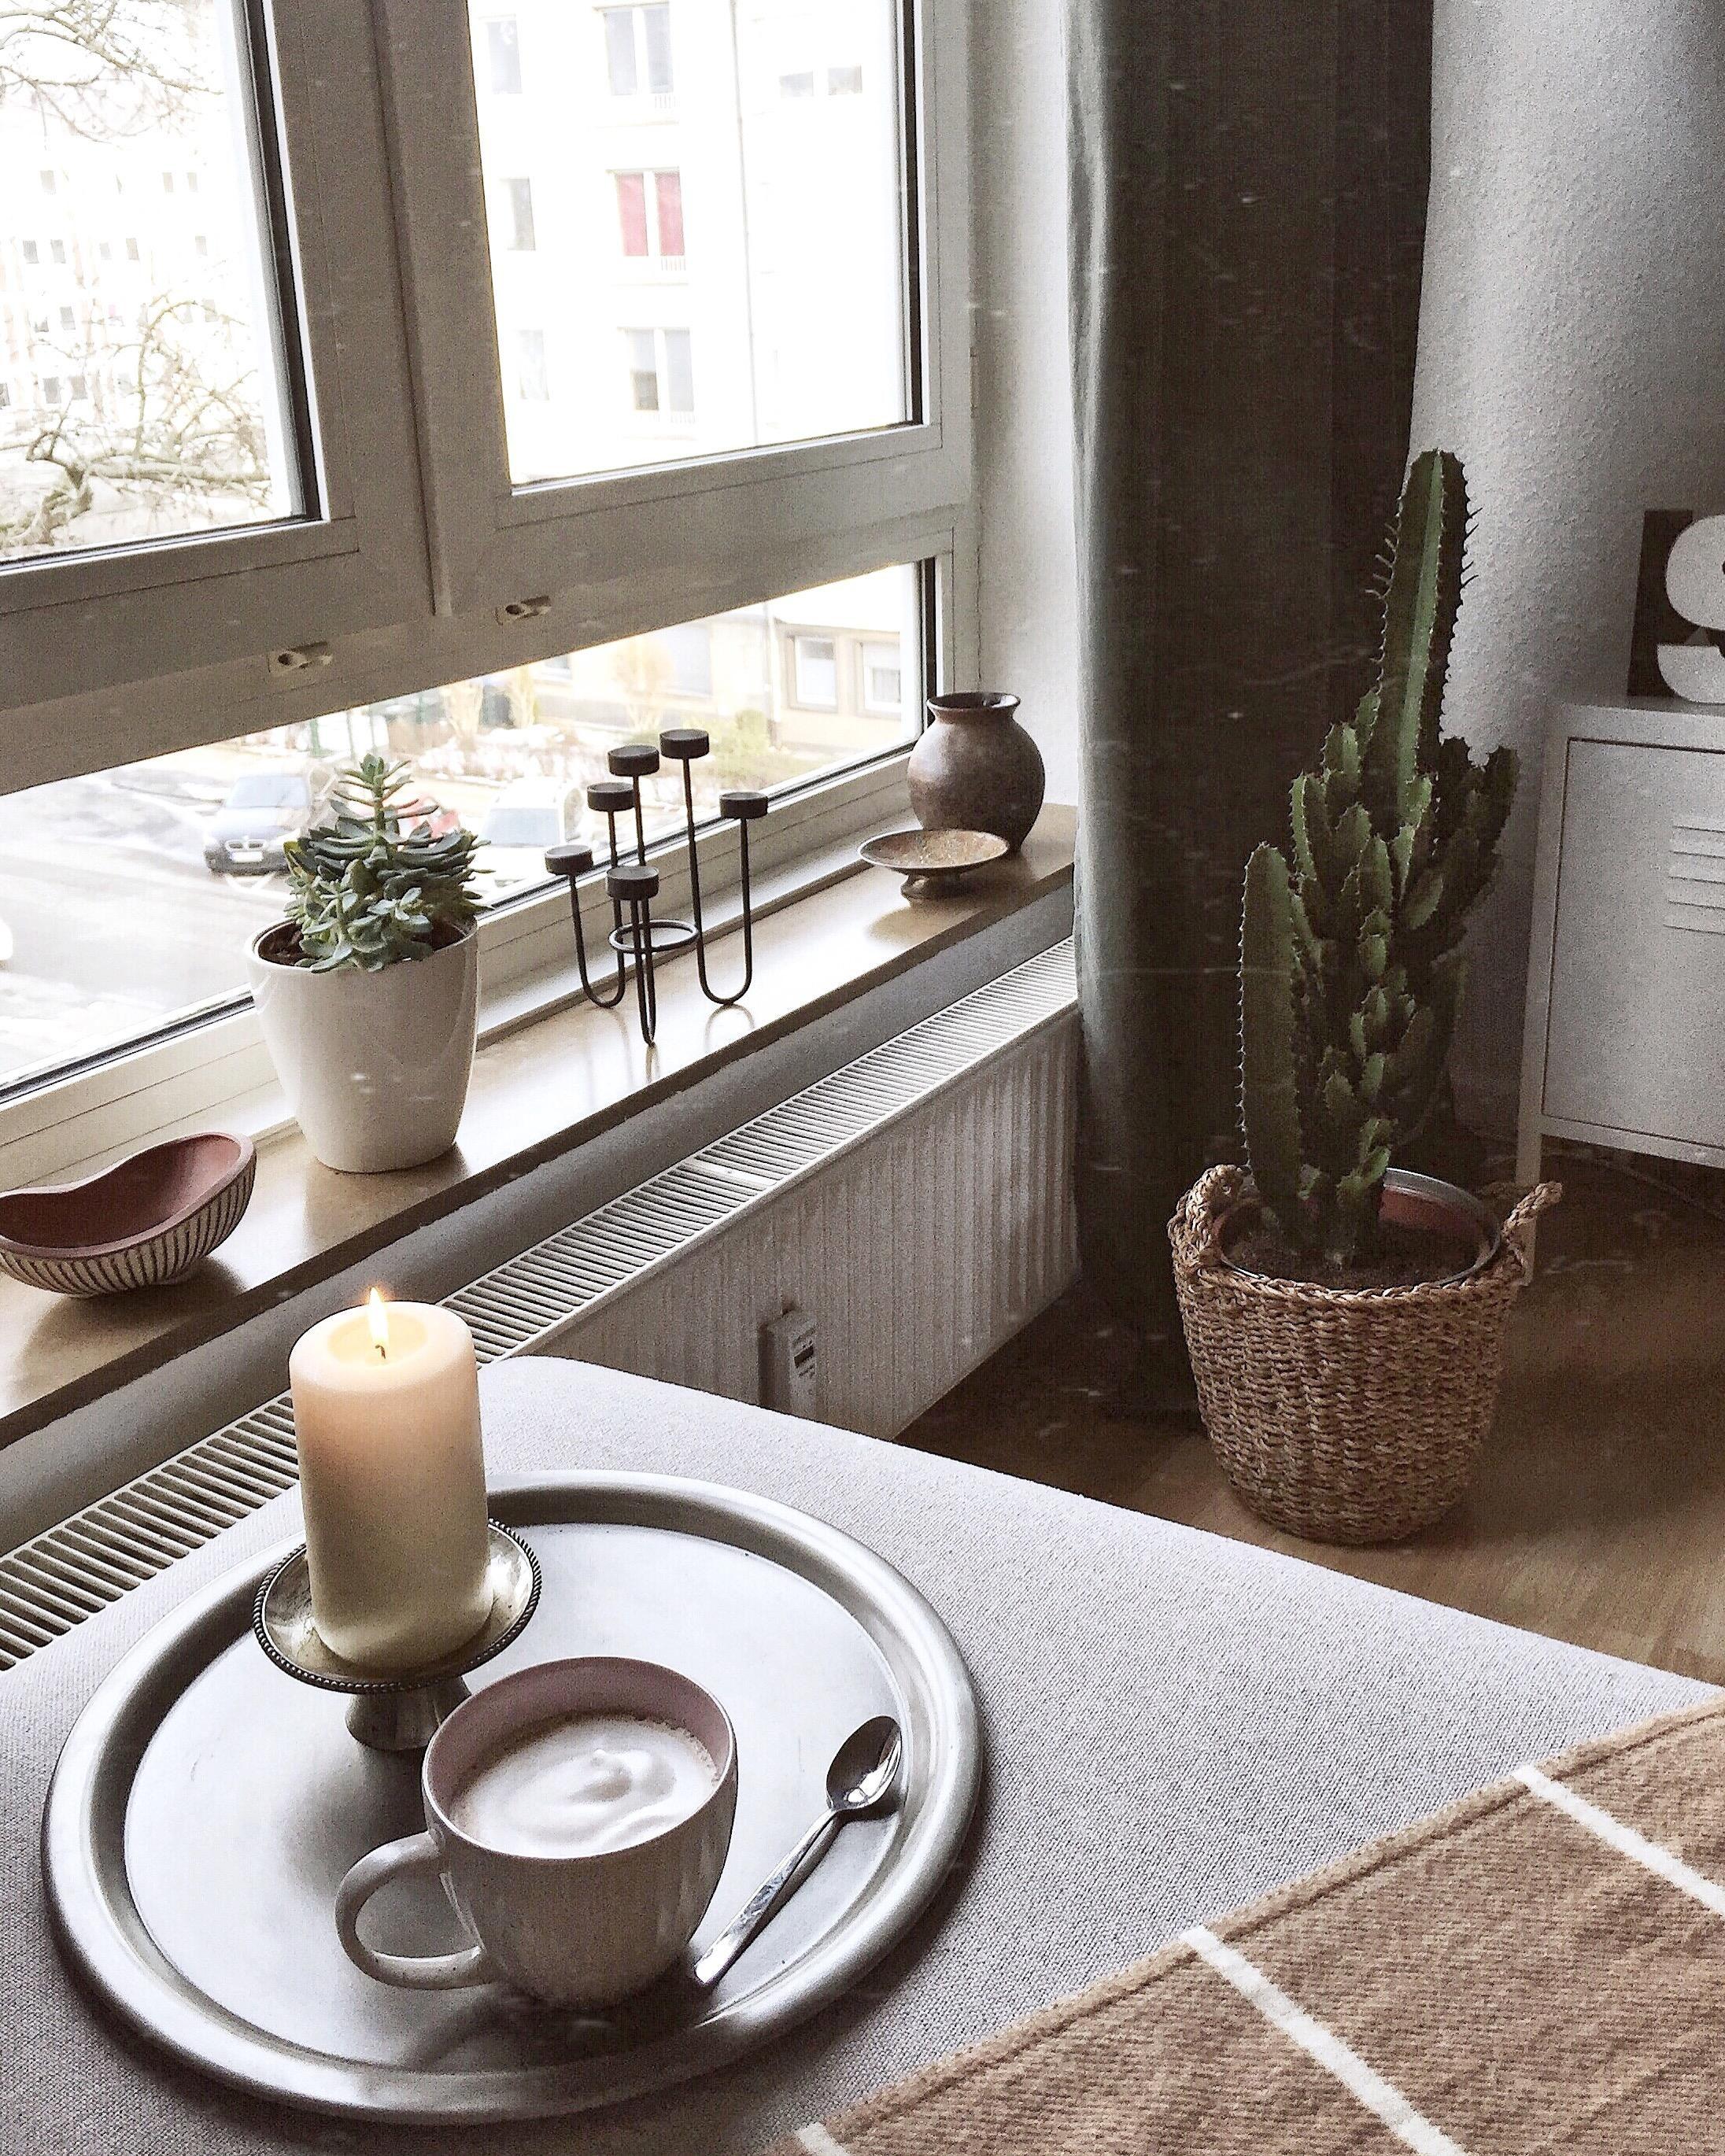 Sundays are for #coffee and #windowwatching 

#erstewohnung #grosseliebe